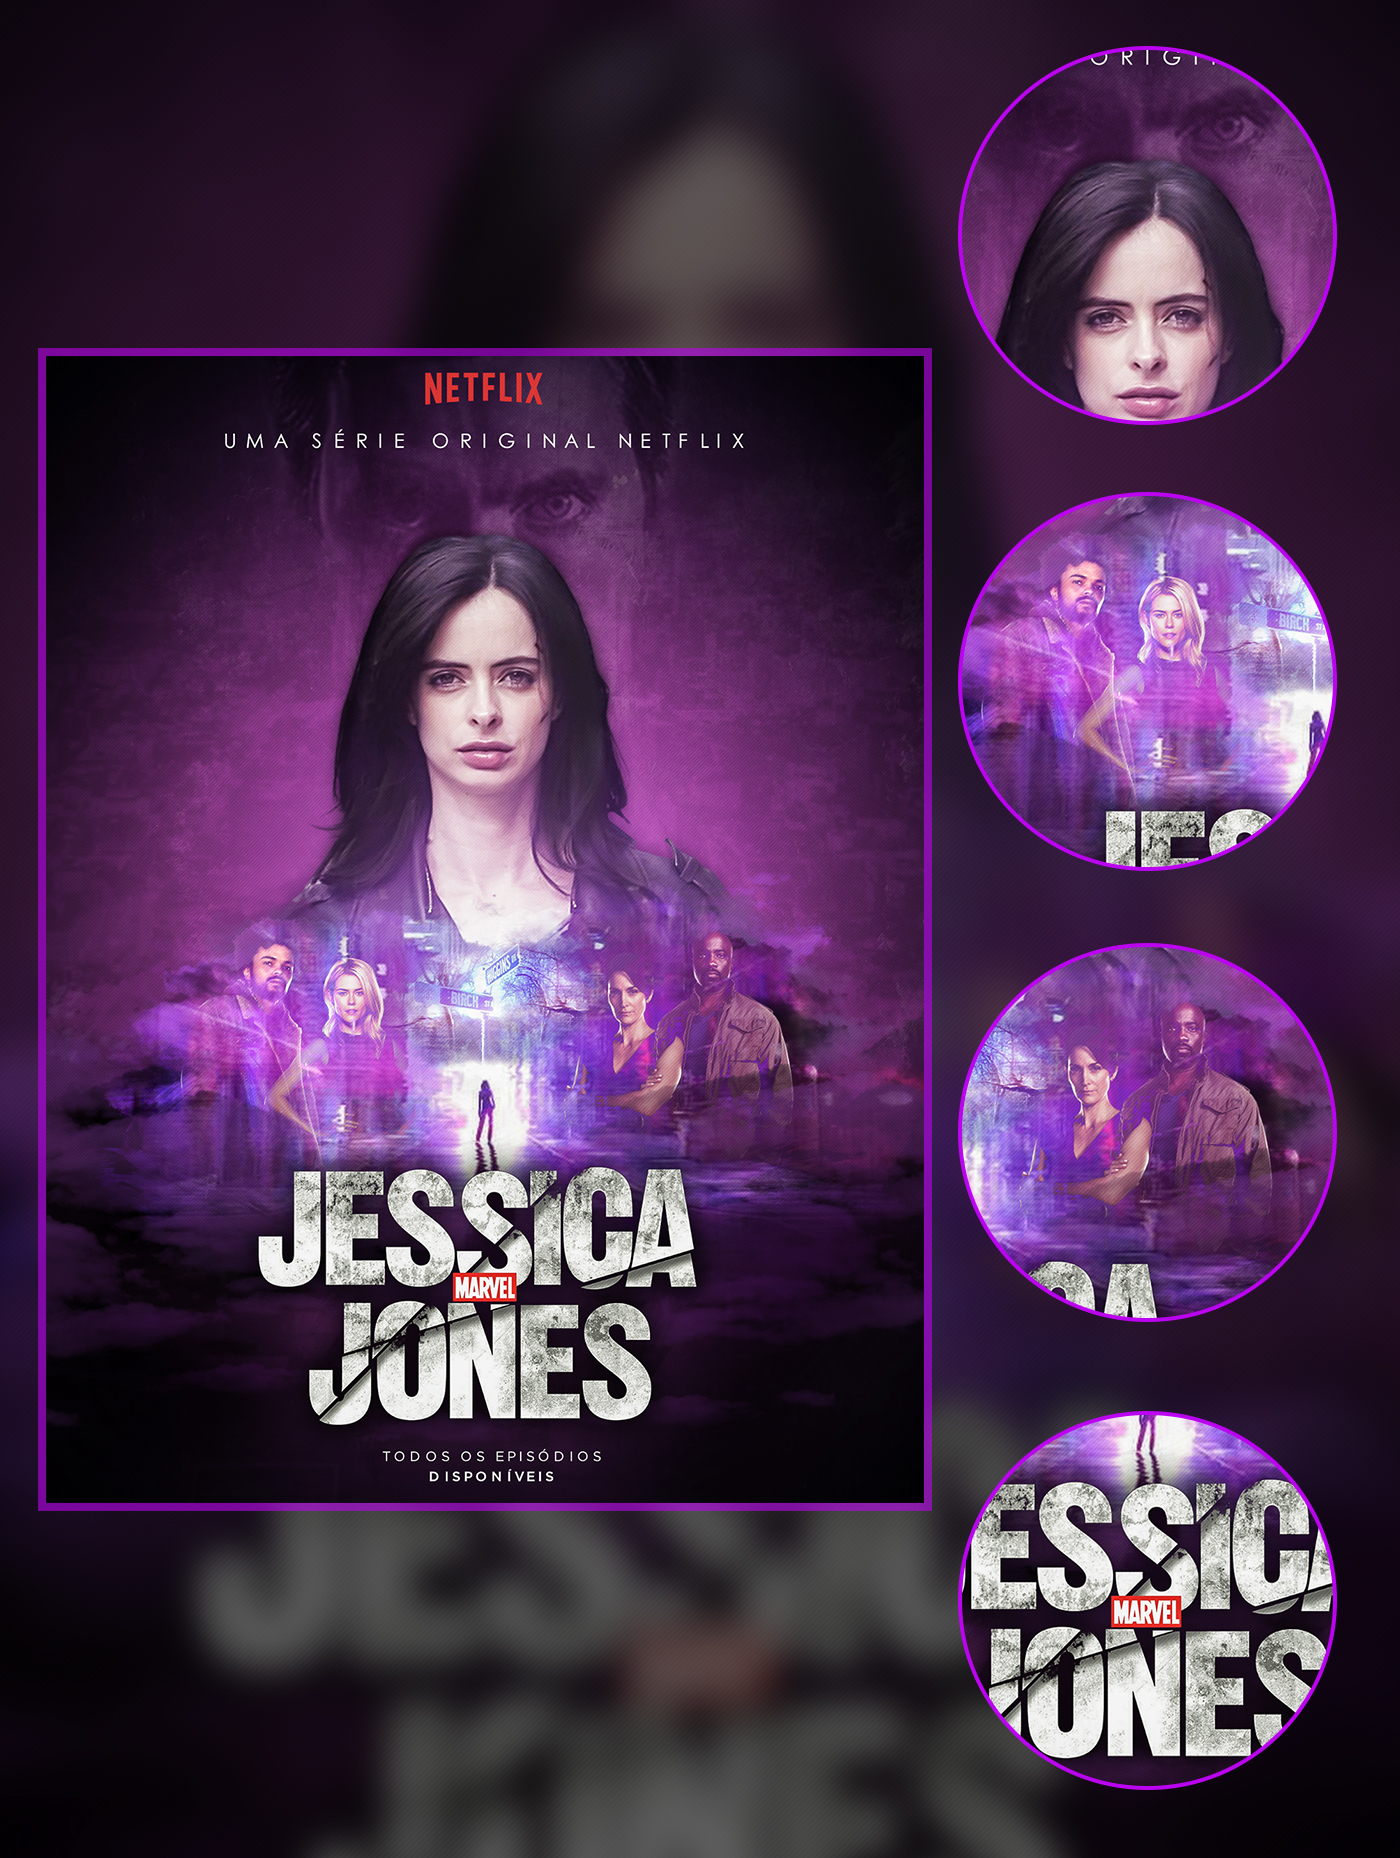 jessicajones Jones Netflix cartaz concept Proporção aurea marvel poster fanart